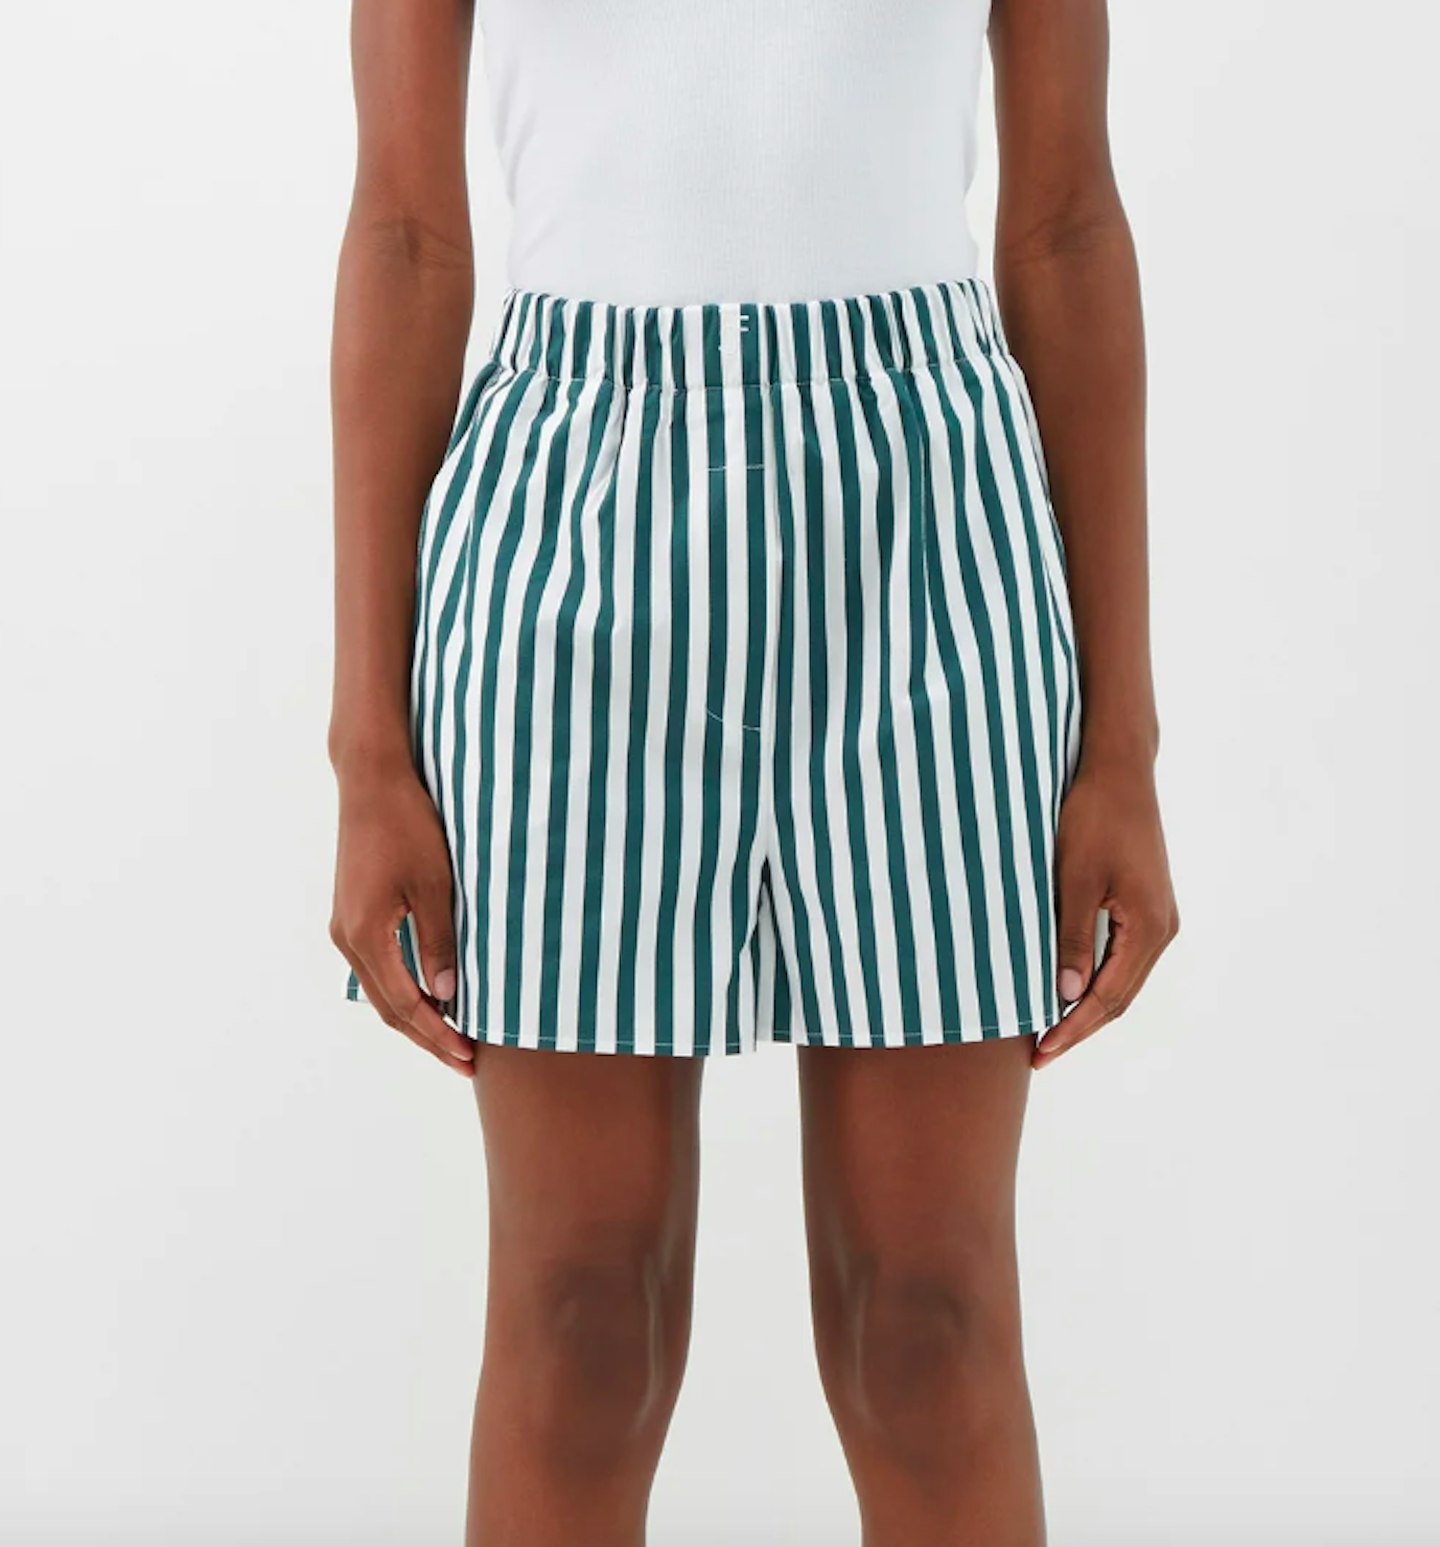 The Frankie Shop, Lui Striped Cotton-Poplin Shorts, £78